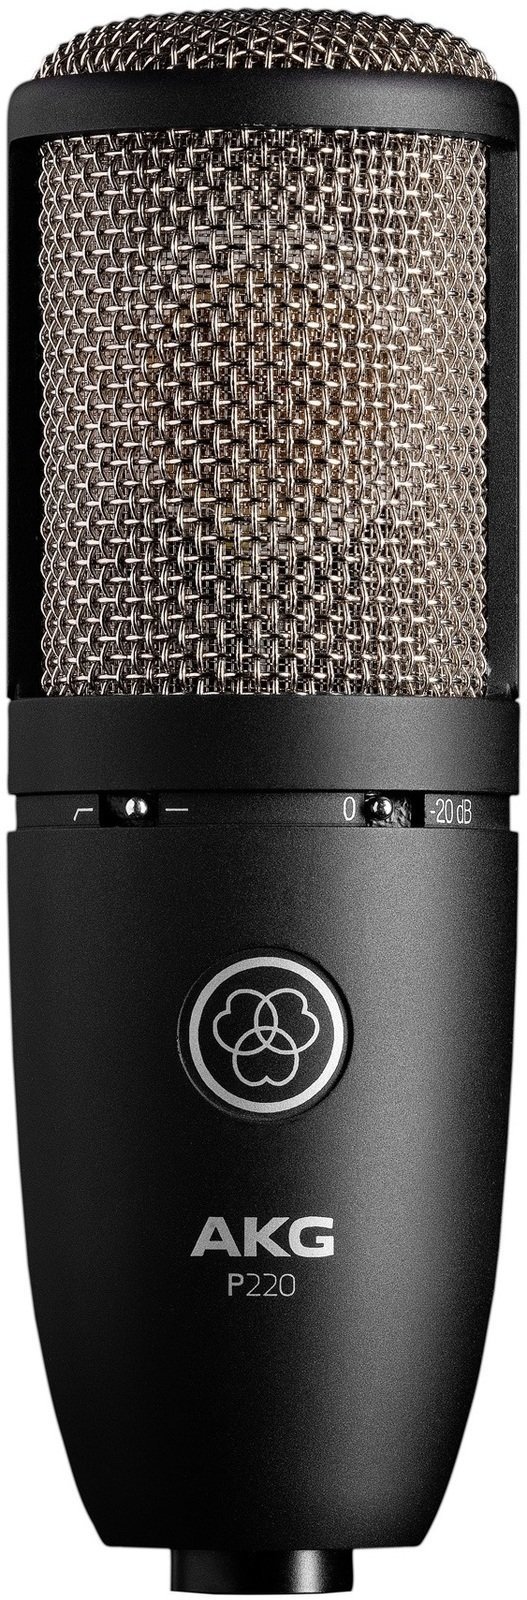 AKG P220 Condenser Microphone AKG